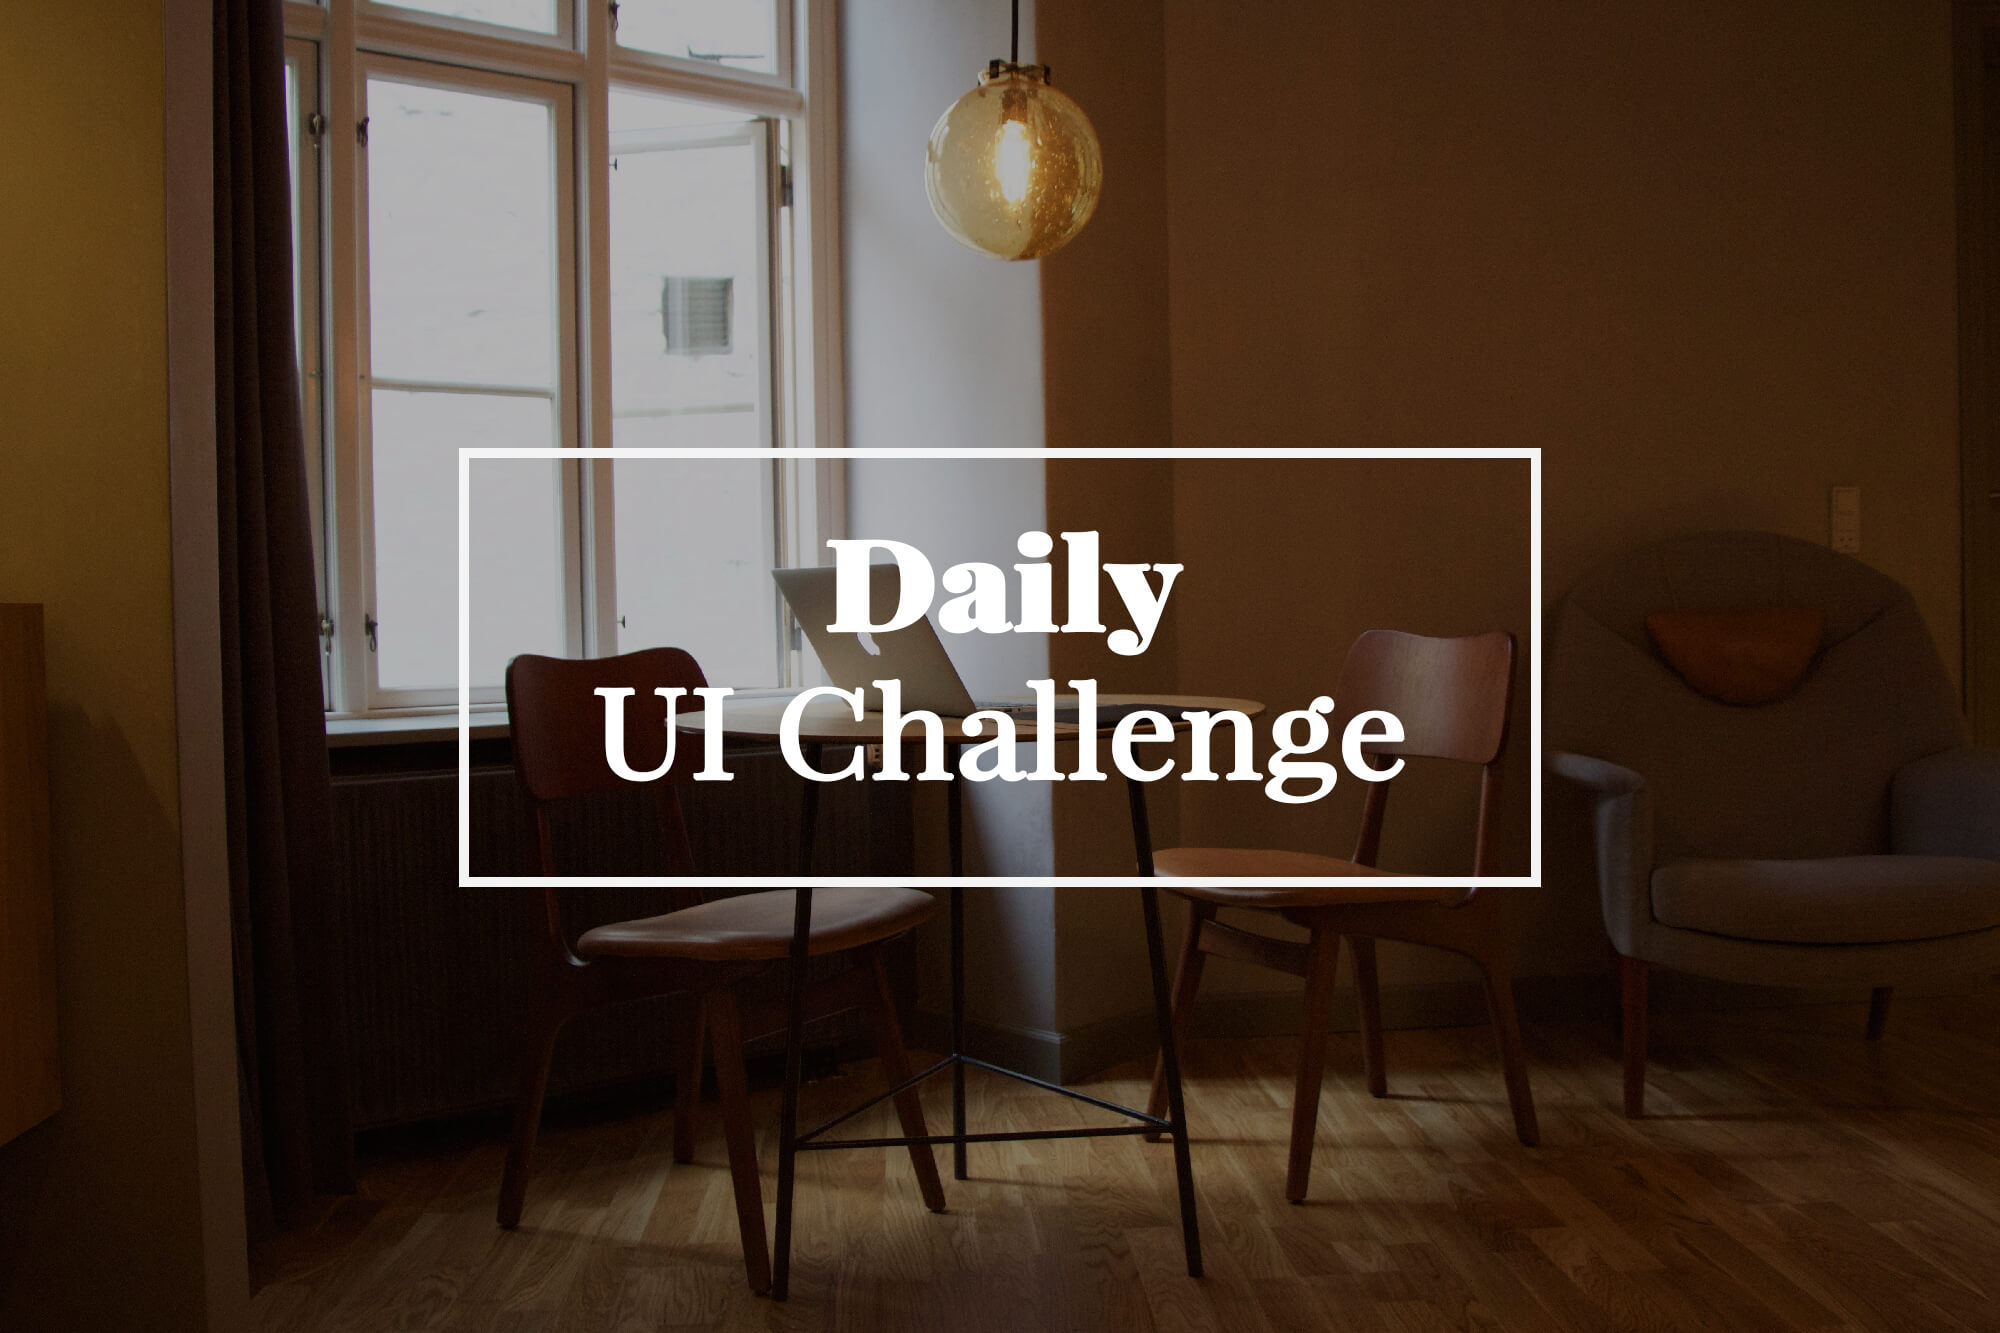 Daily UI Challenge